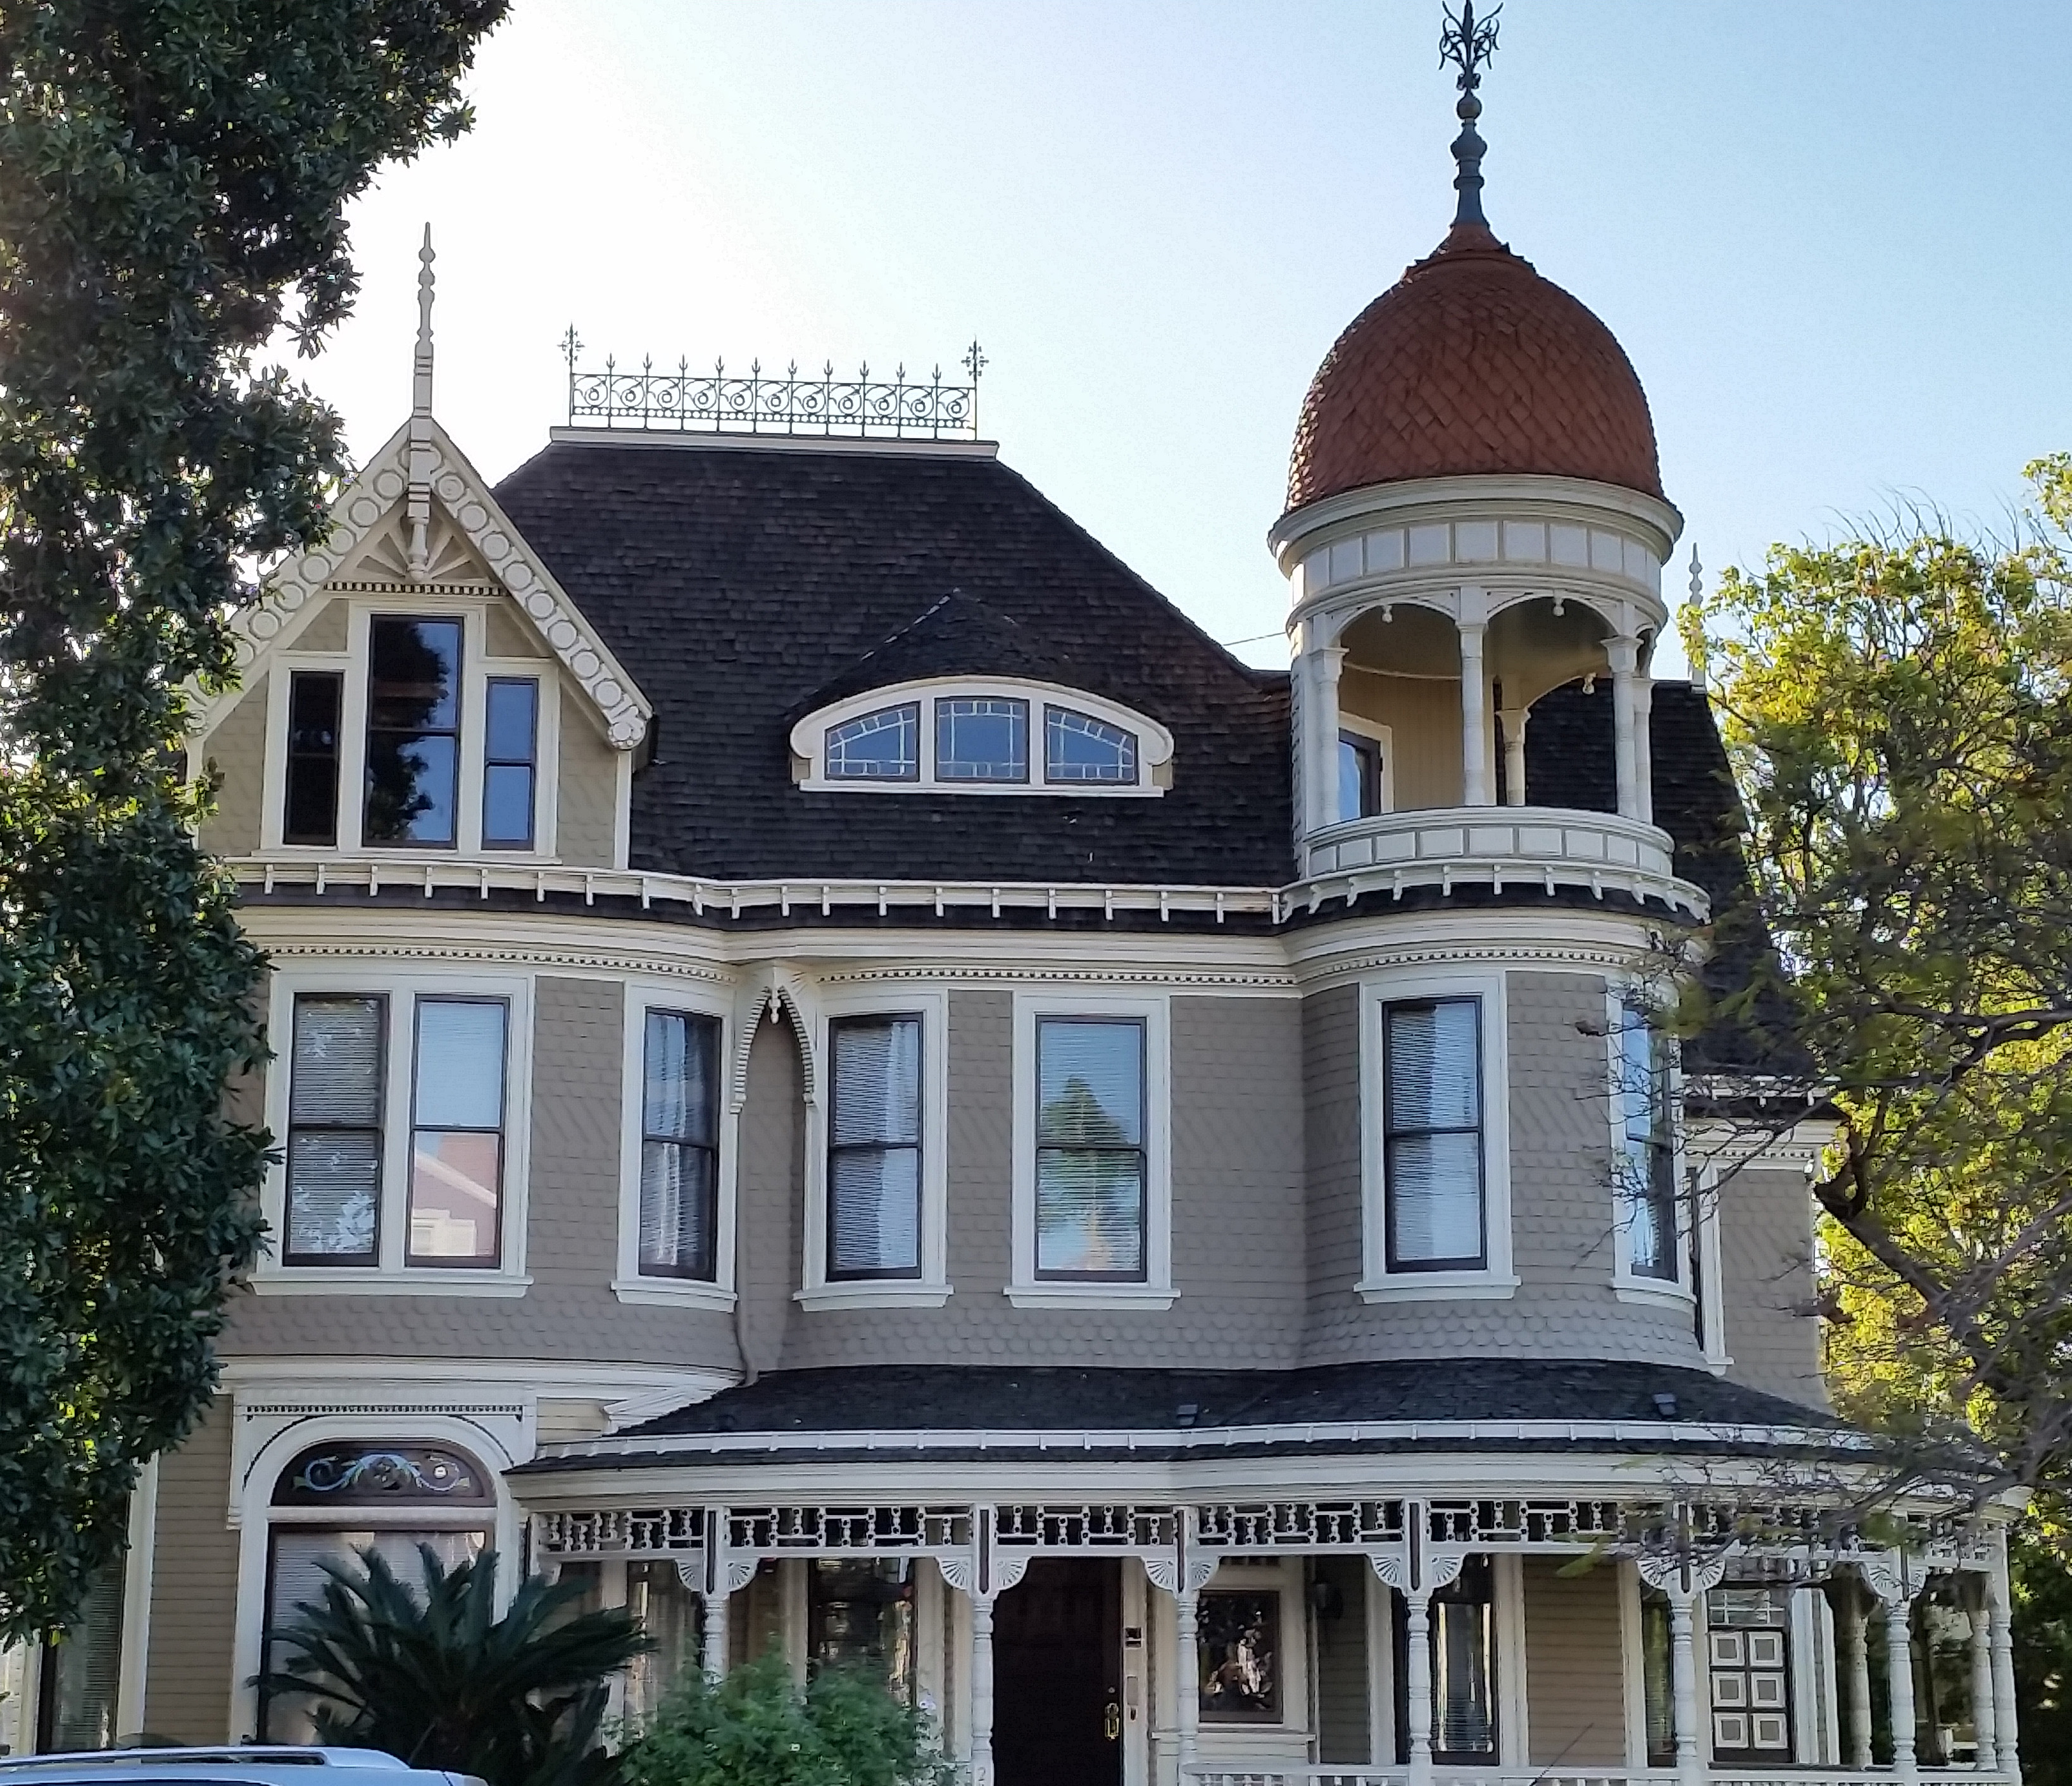 Victorian - San Diego Vintage Homes